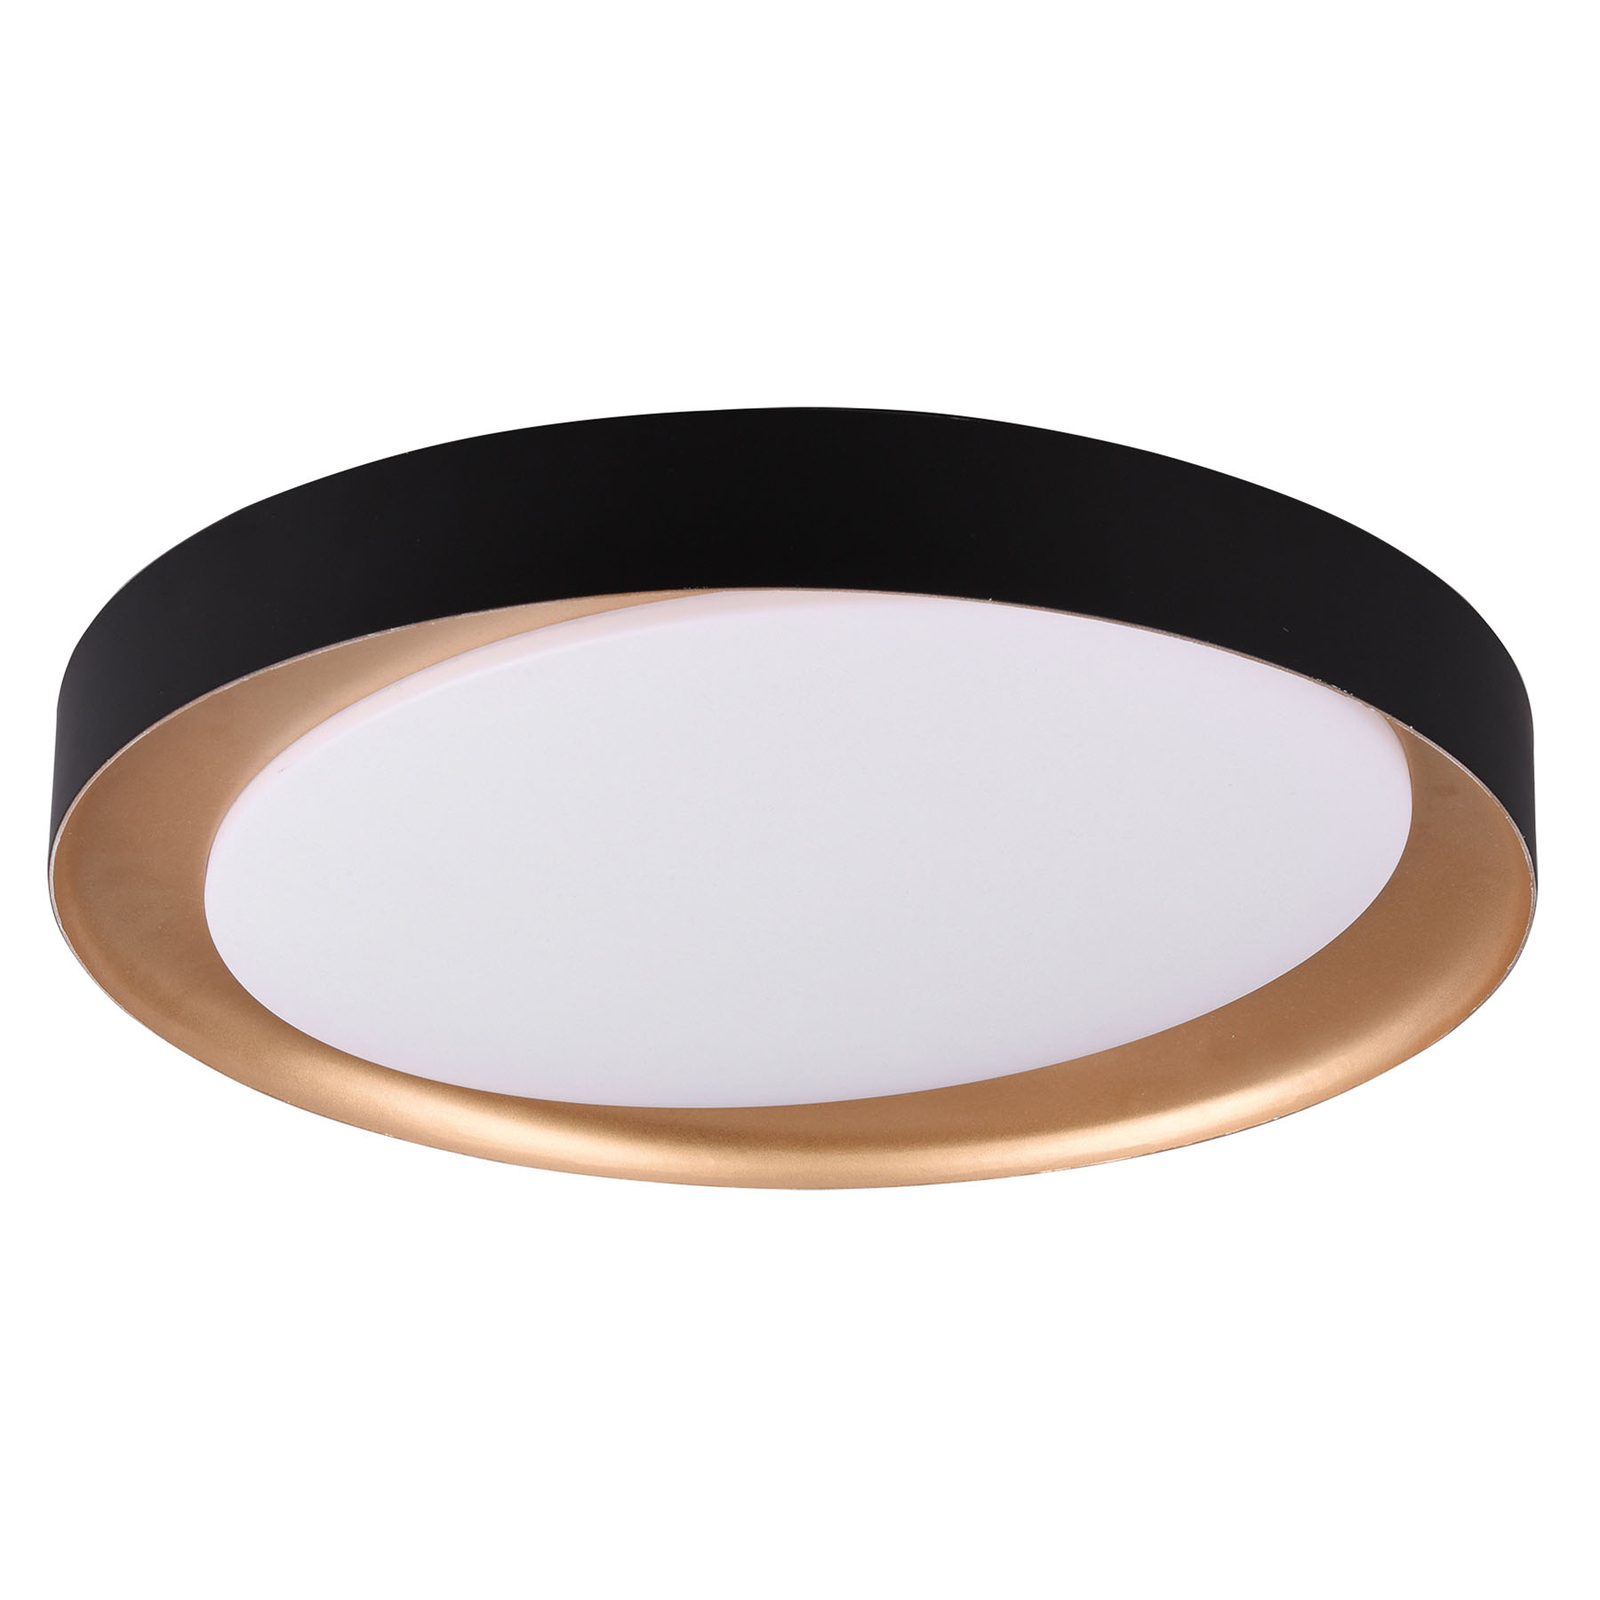 LED-Deckenleuchte Zeta tunable white, schwarz/gold